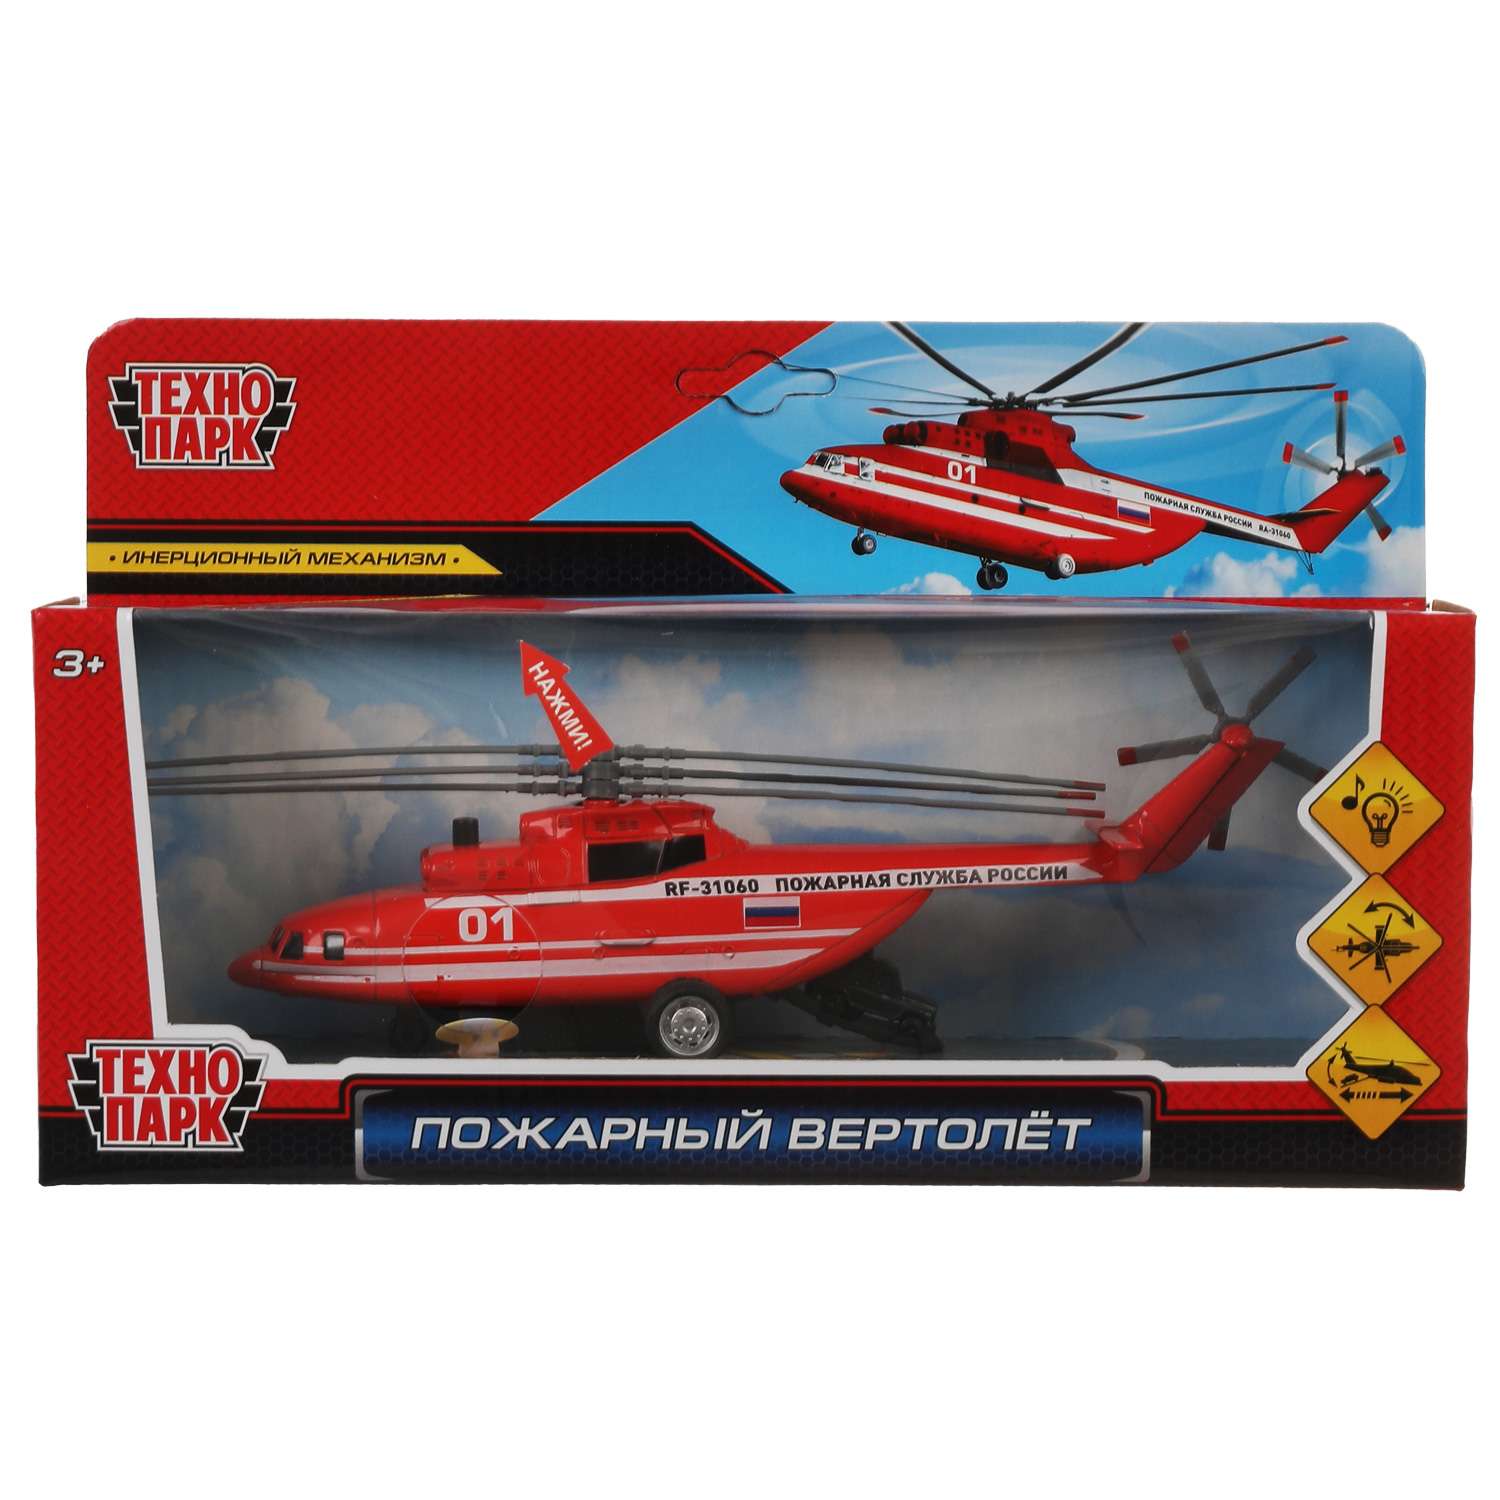 Технопарк 20 256гб. Технопарк игрушки вертолет МЧС. Copter-20slmil-BN модель металл свет-звук вертолет. Вертолет Технопарк ВВС (10115-R) 7.5 см. Вертолет Технопарк 177453.